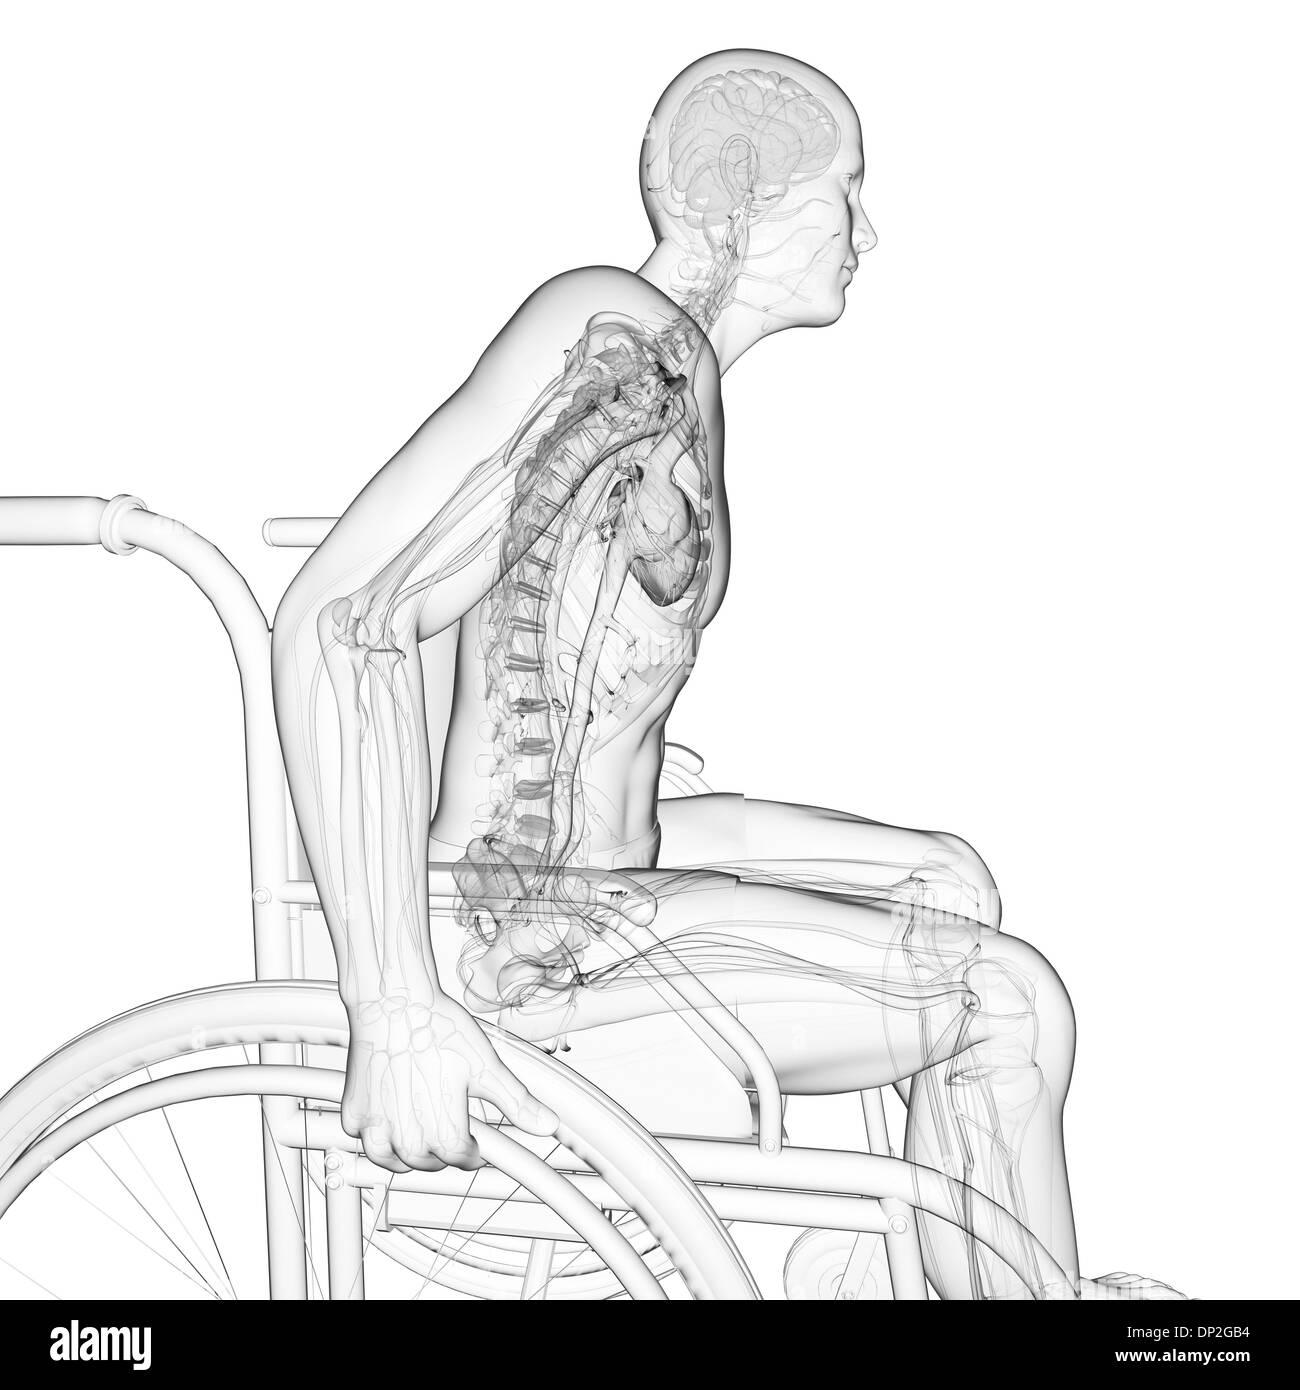 Man in a wheelchair, artwork Stock Photo